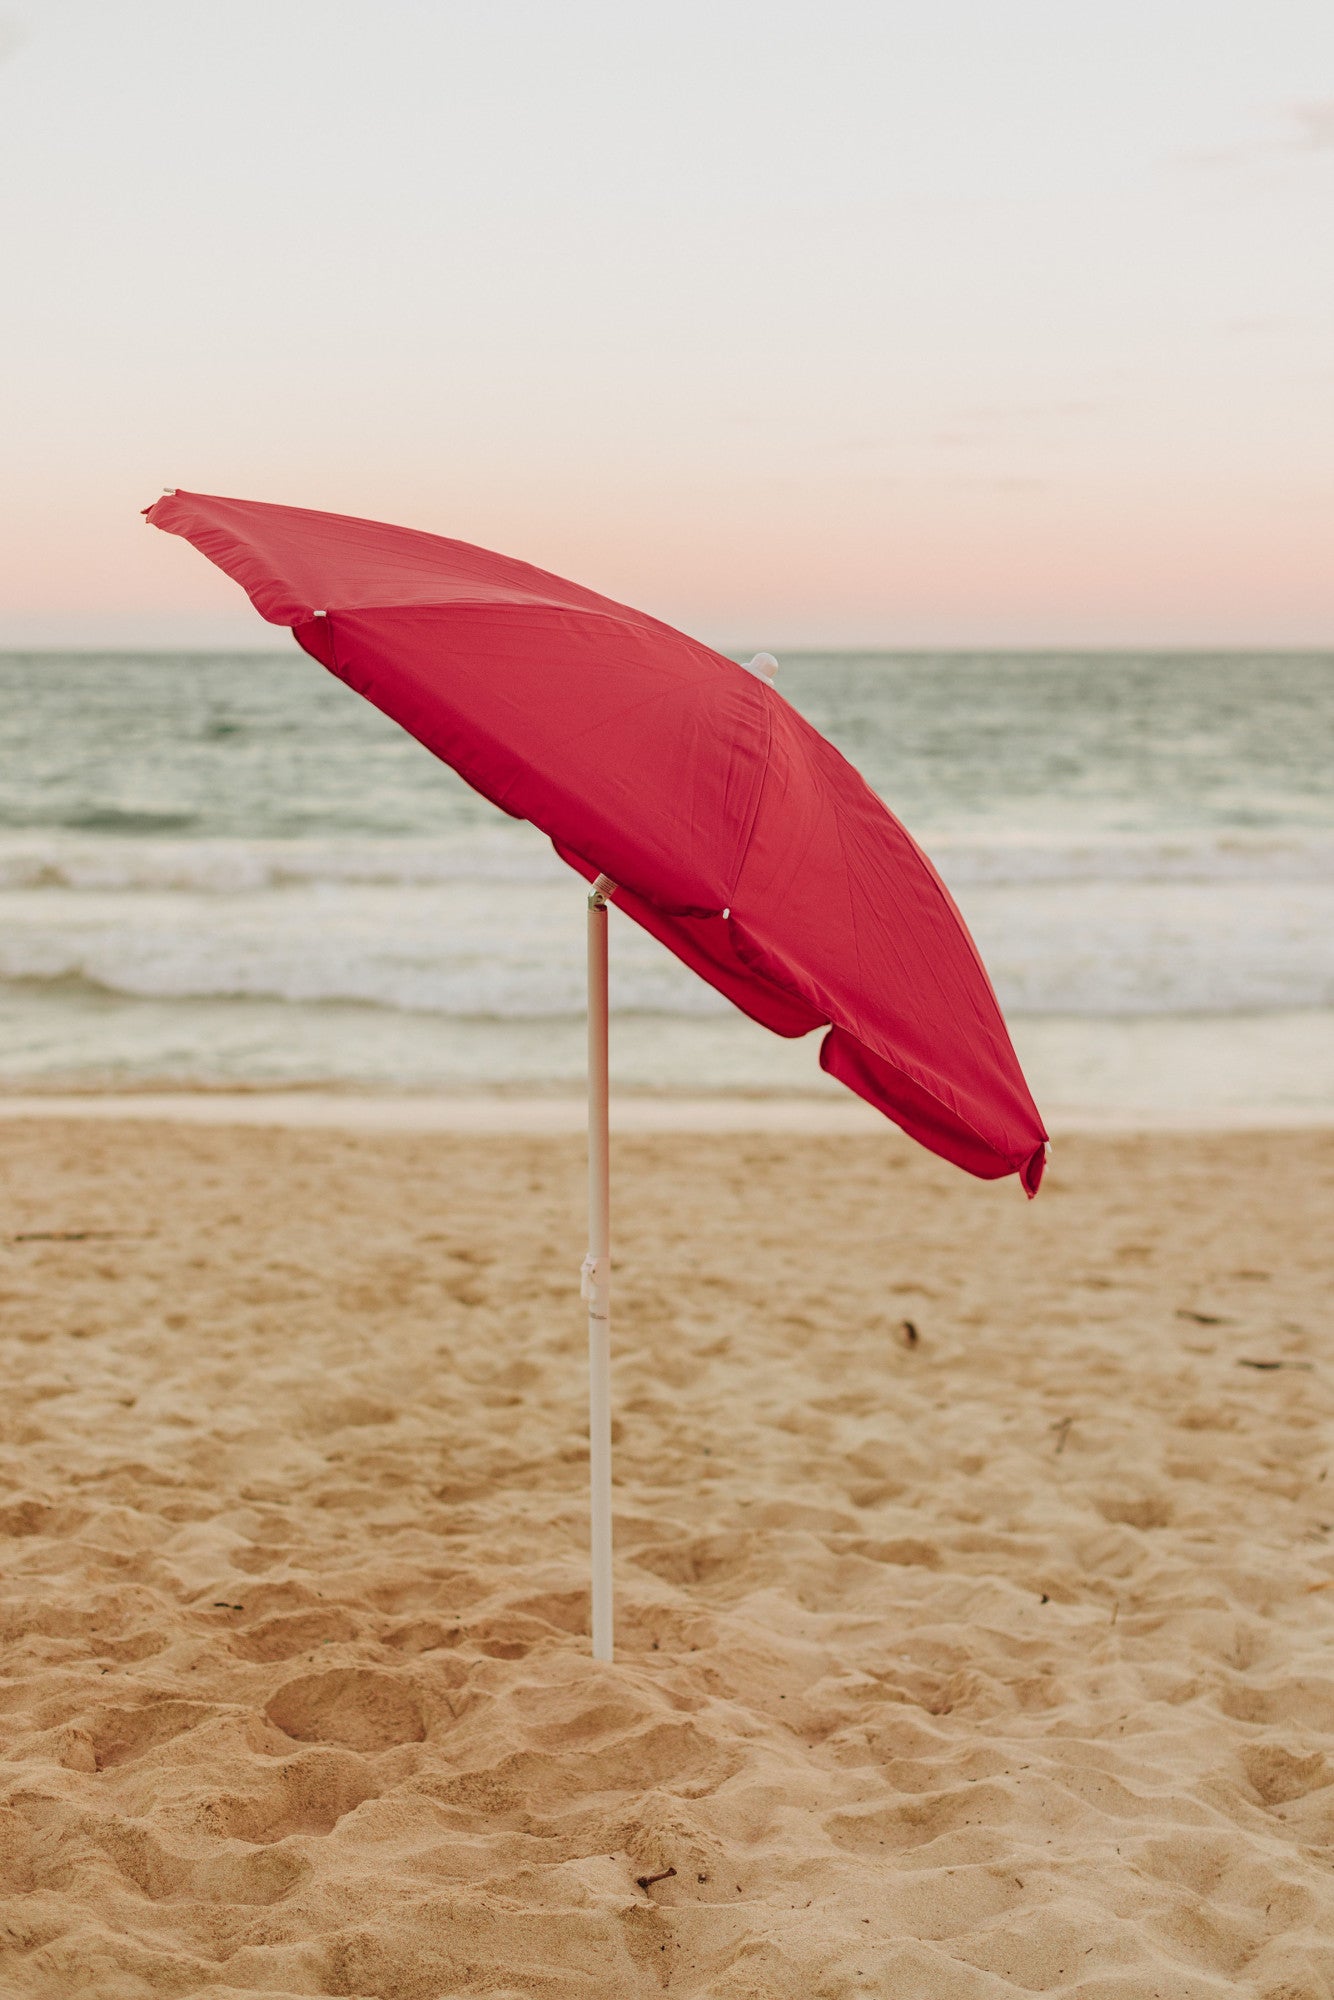 Iowa State Cyclones - 5.5 Ft. Portable Beach Umbrella